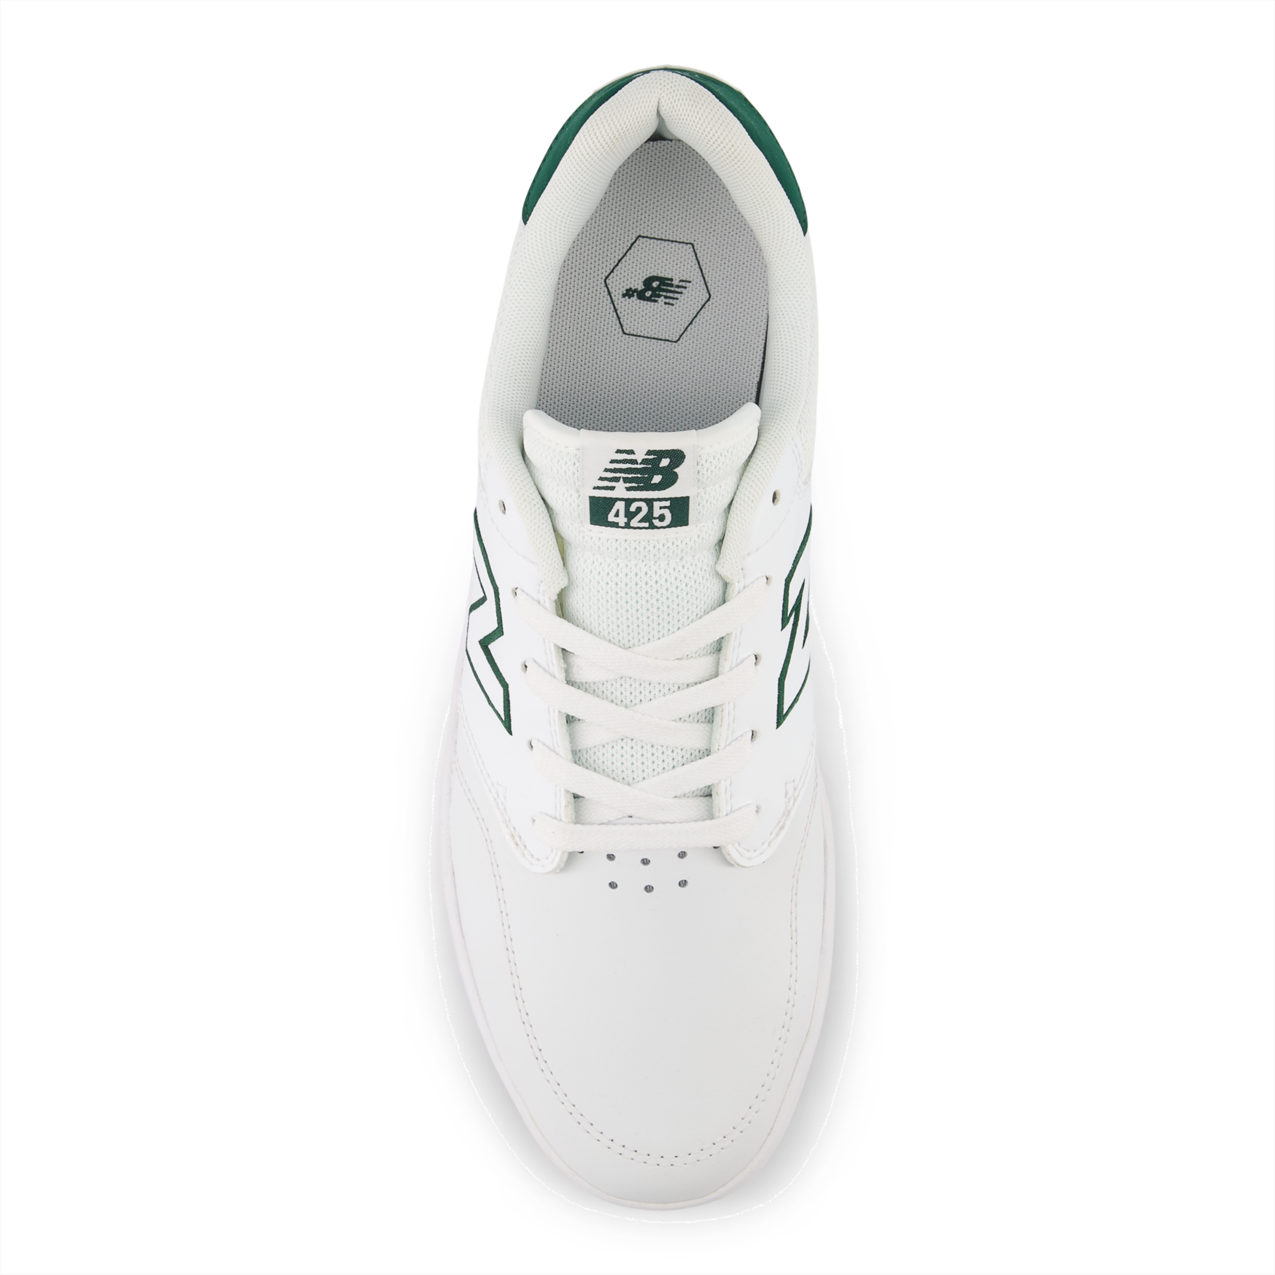 New Balance Numeric Men's 425 White Green Shoes